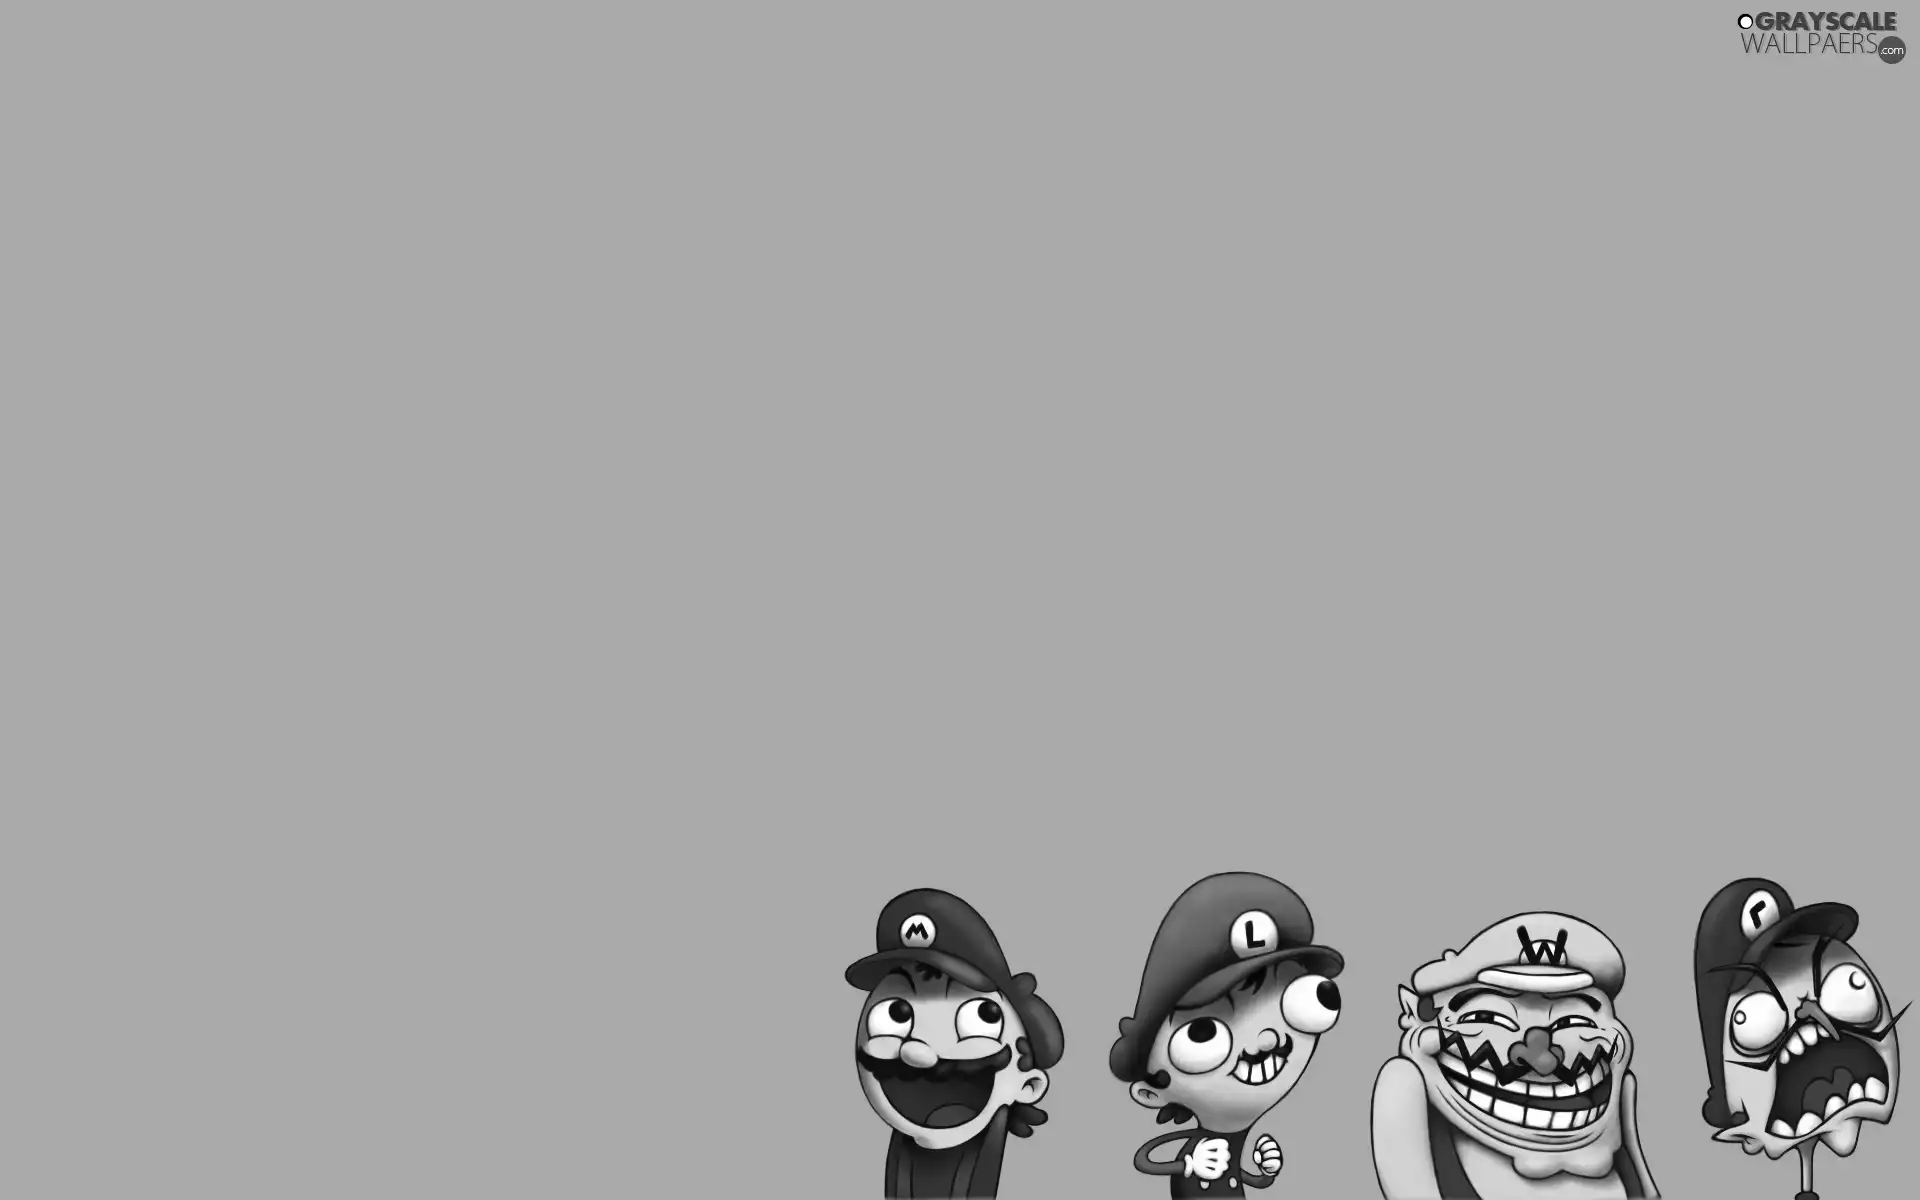 Characters, Mario Bros